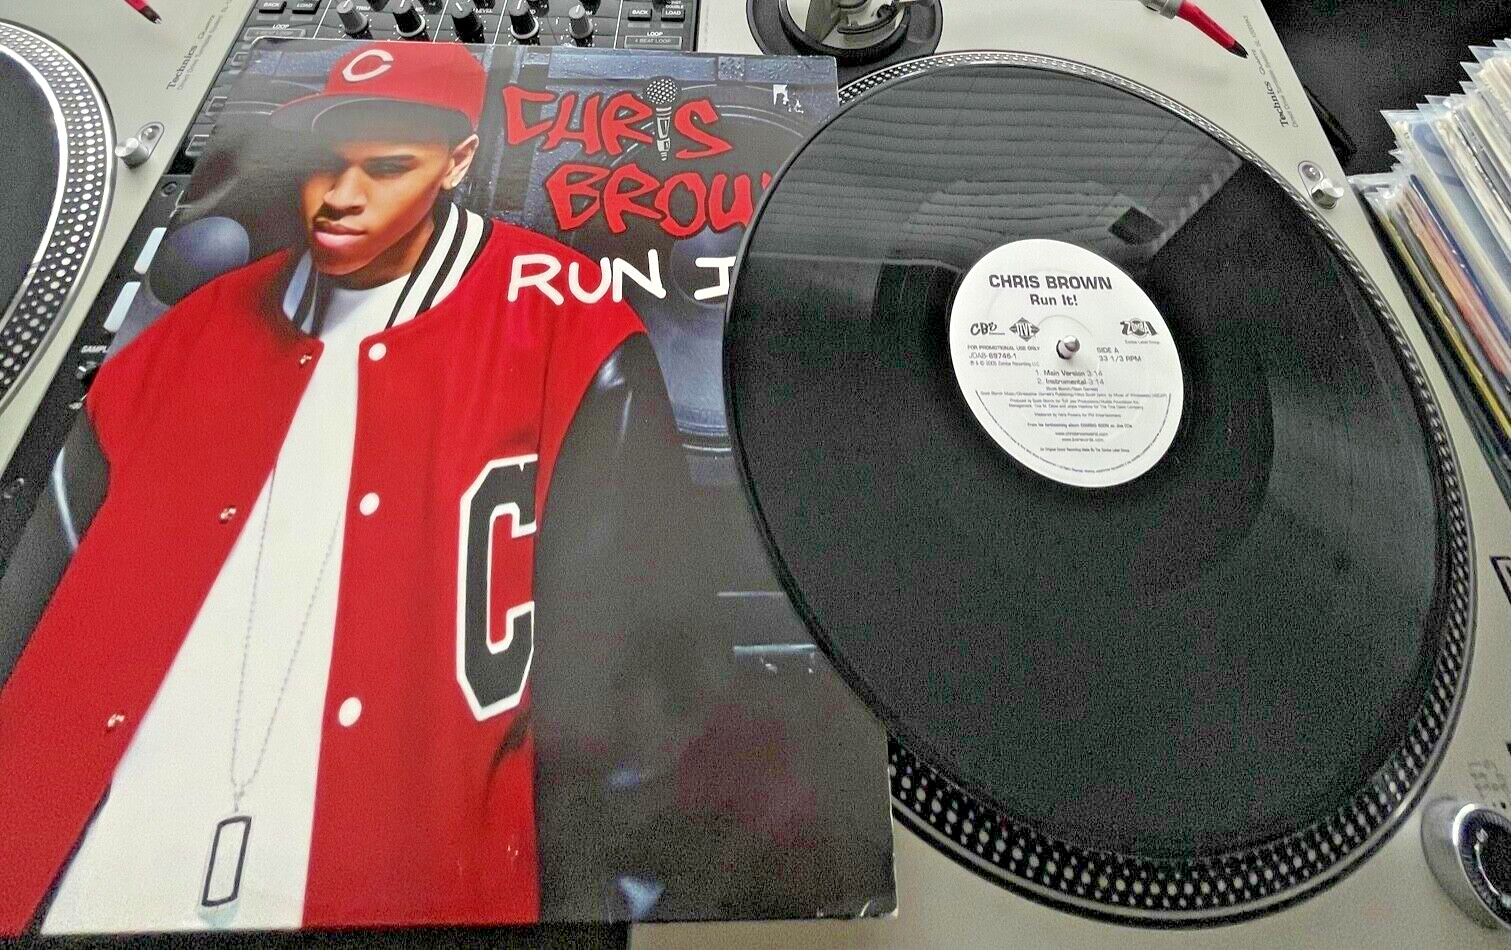 Chris Brown - Run It Original 2005 Press 12" PROMO In Picture Cover VG+